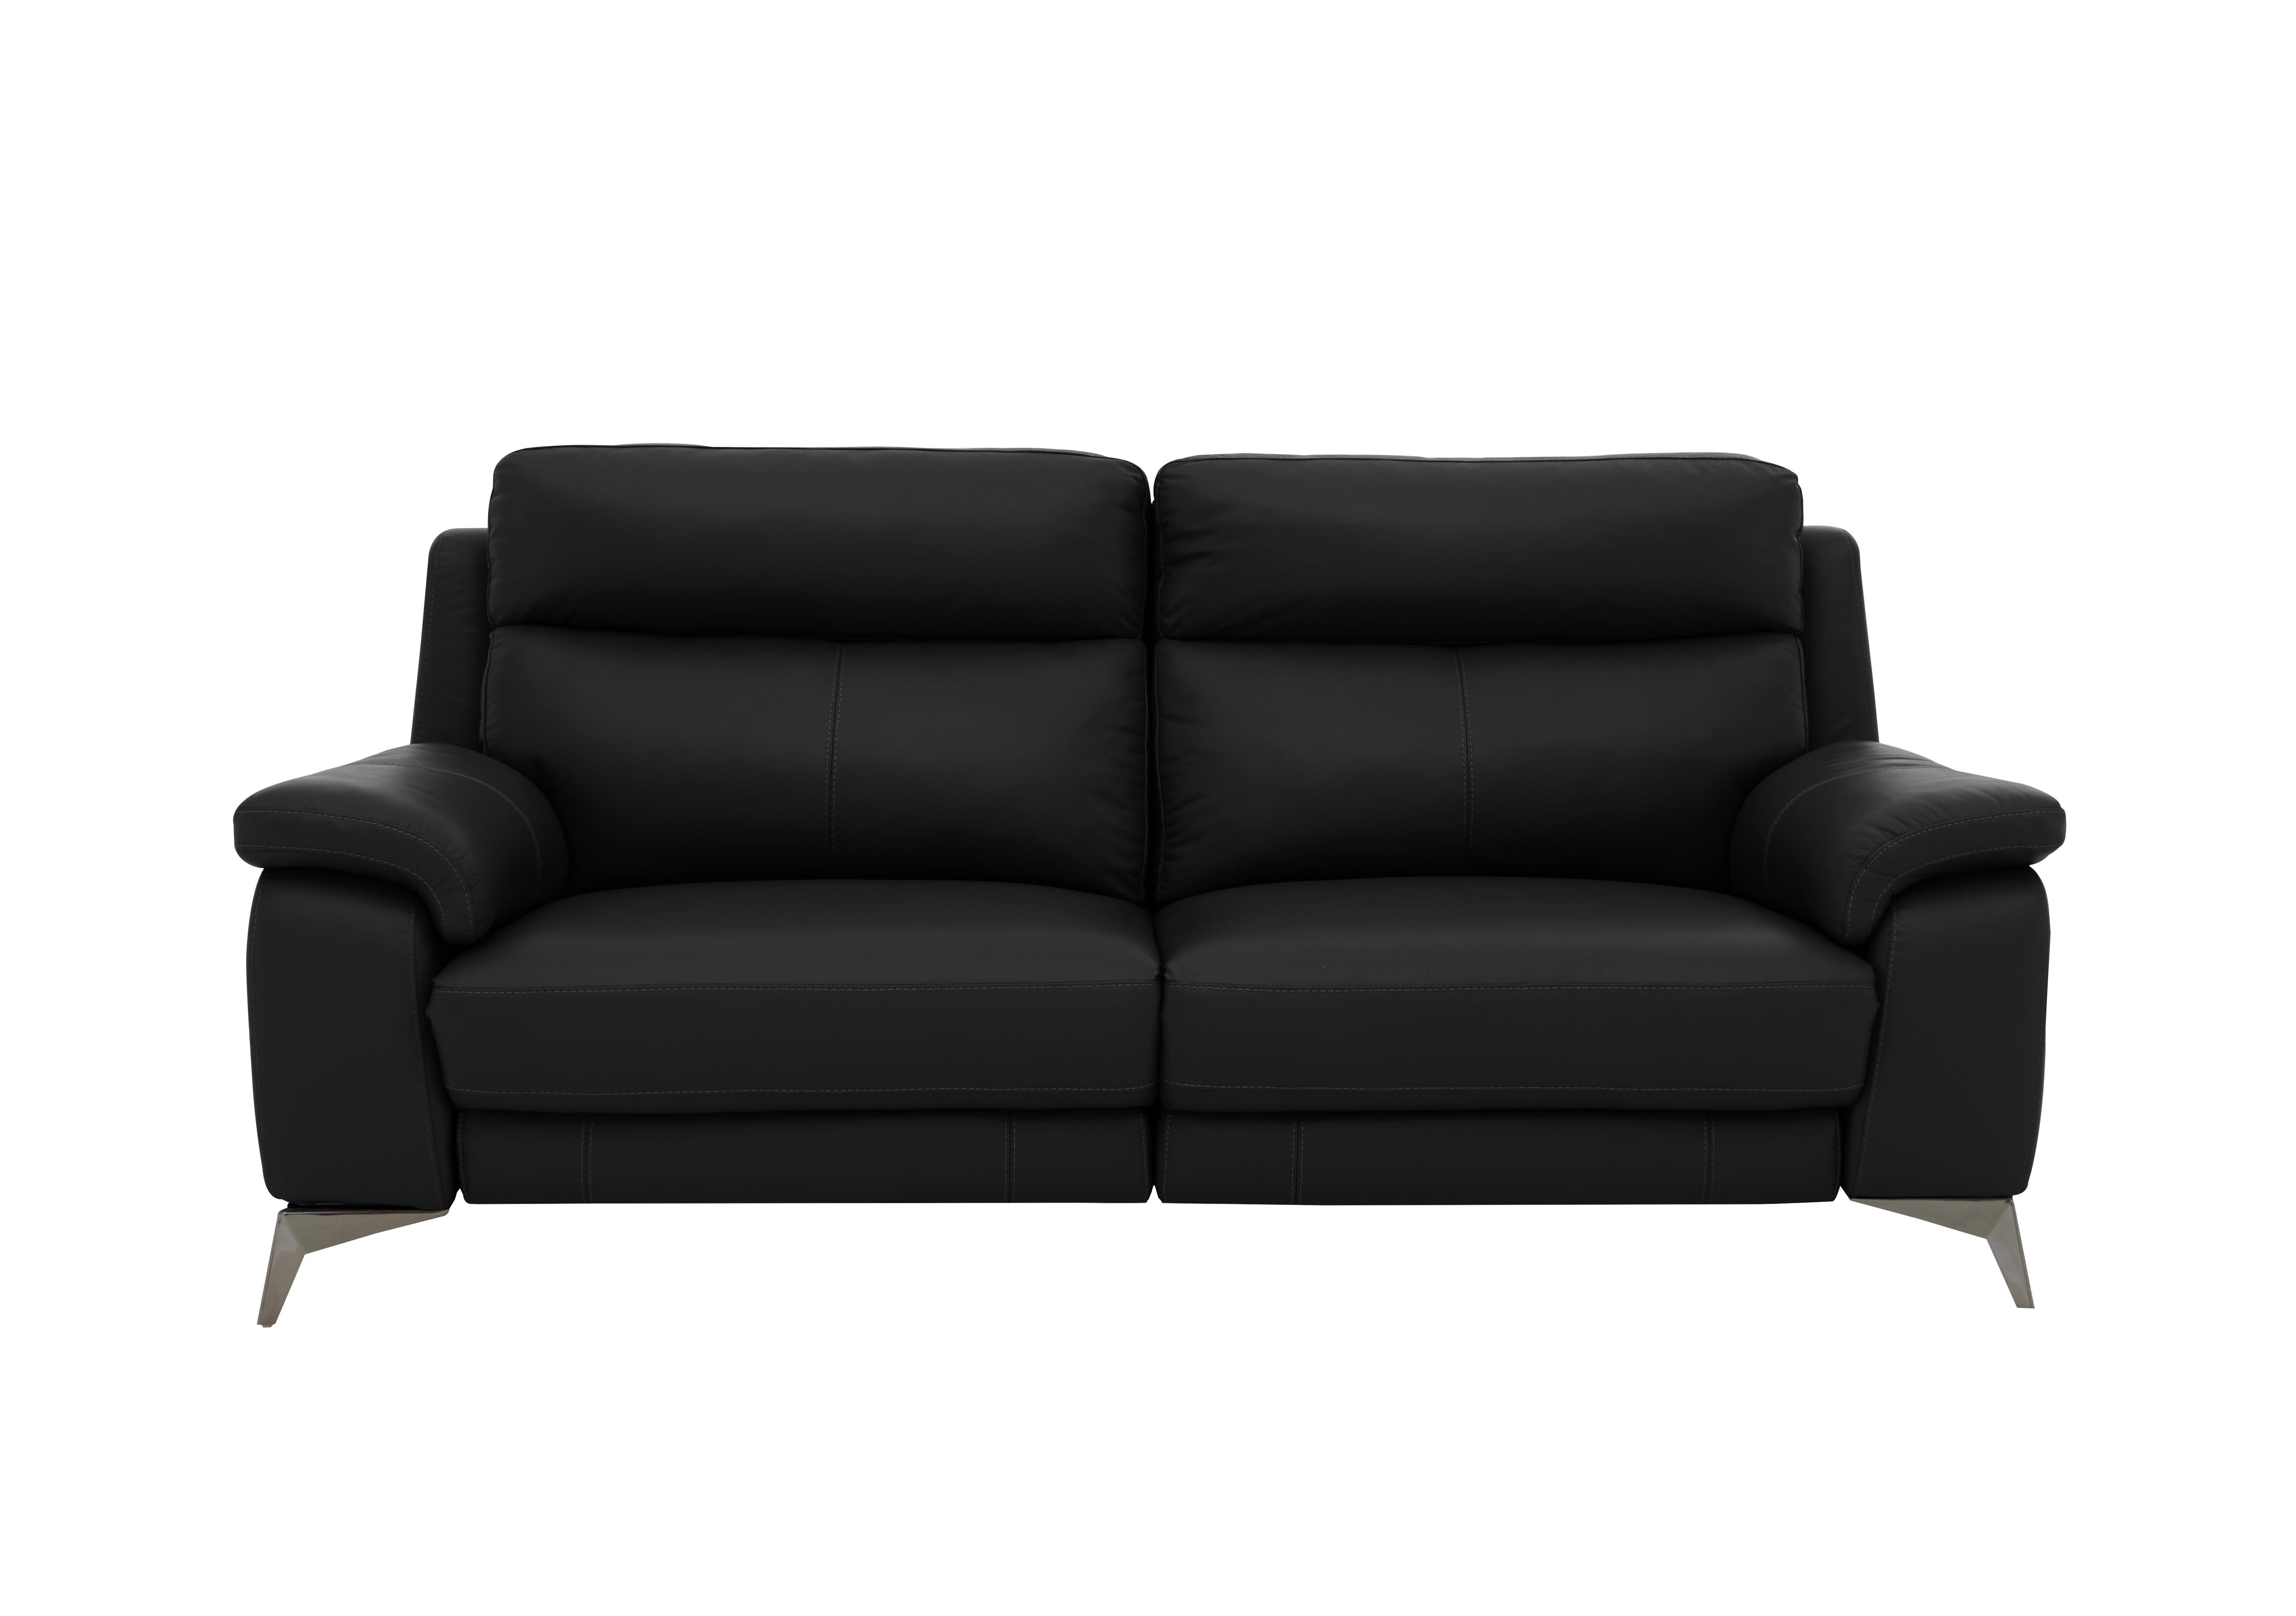 Missouri 3 Seater Leather Sofa in Bv-3500 Classic Black on Furniture Village